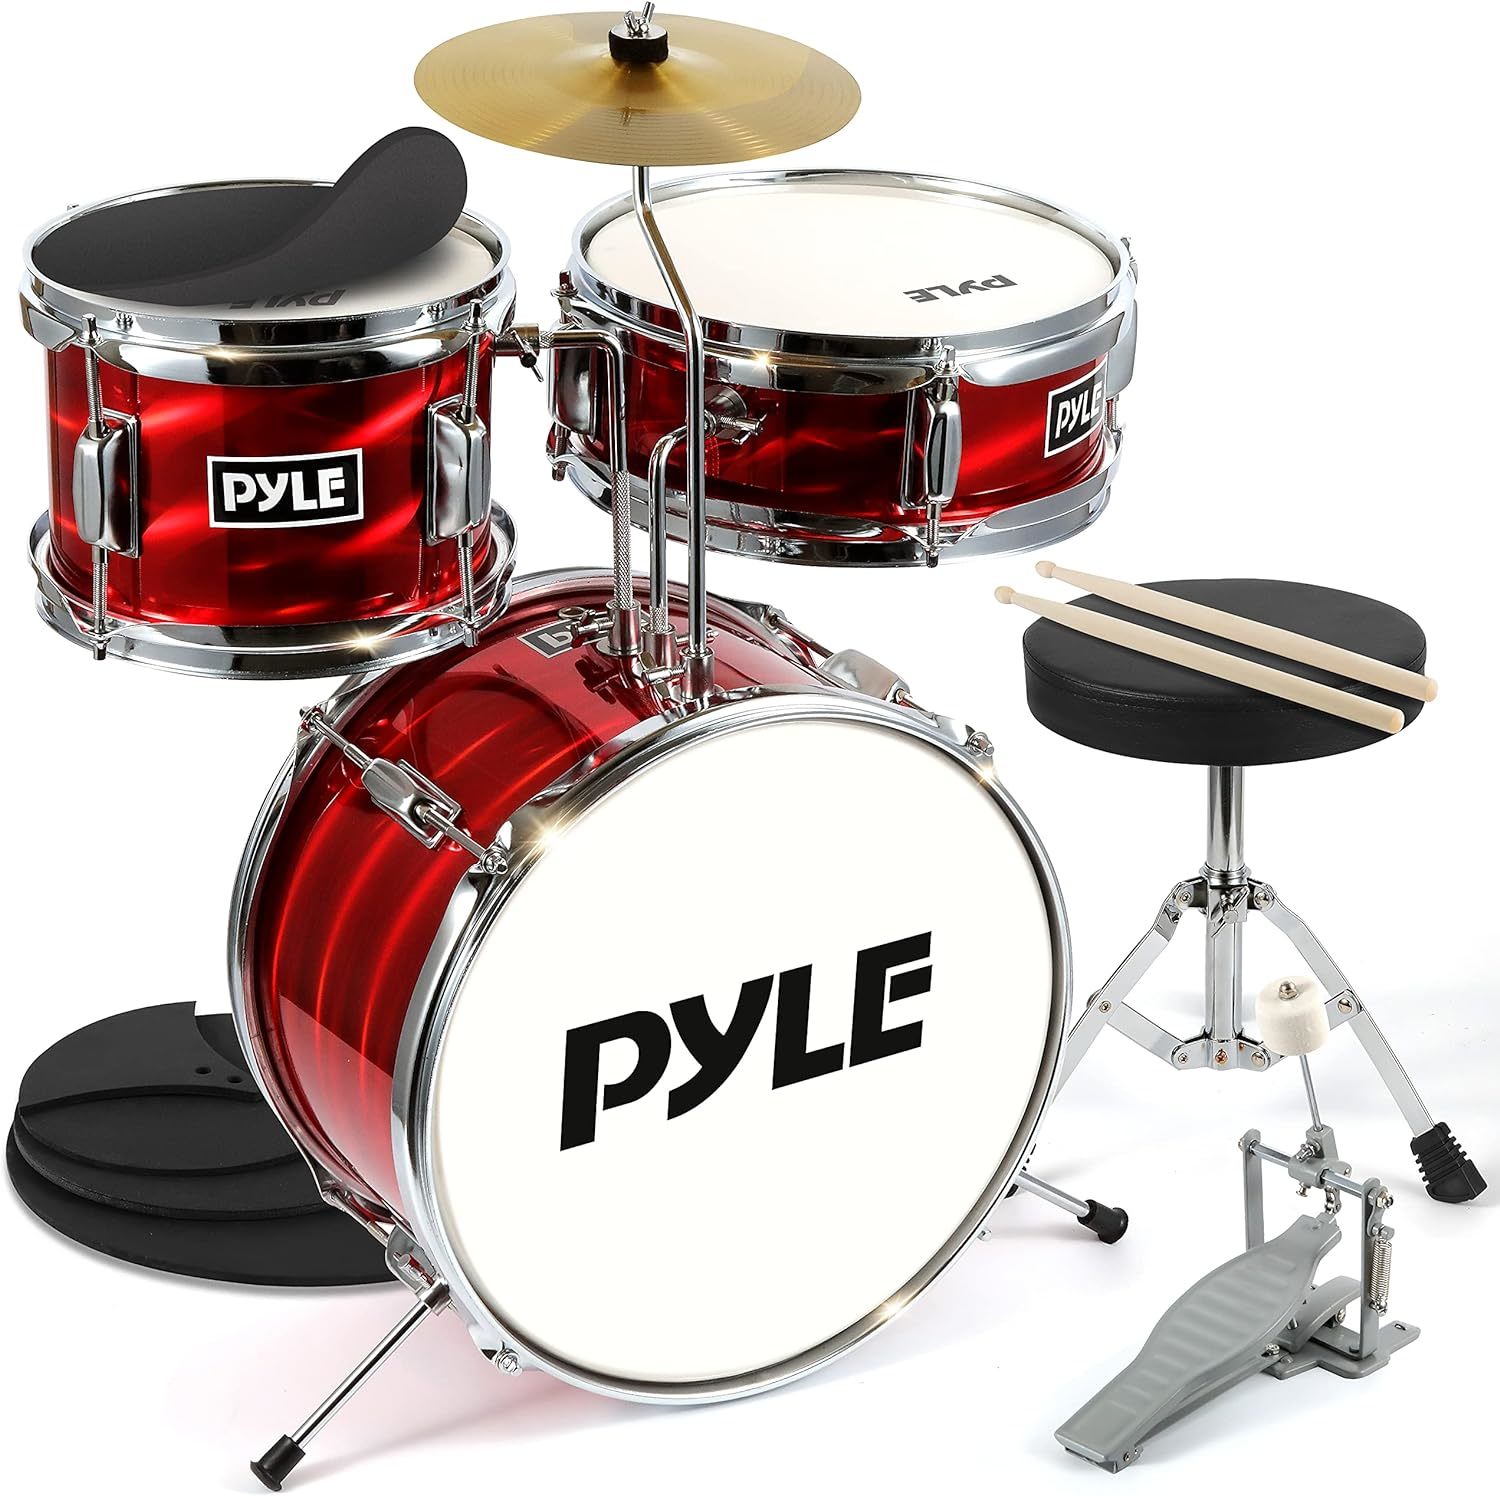 Primary image for Pyle Drum Set For Kids - 3 Pc. Beginner Drum Kit, Silencing Pads 13" Full Junior